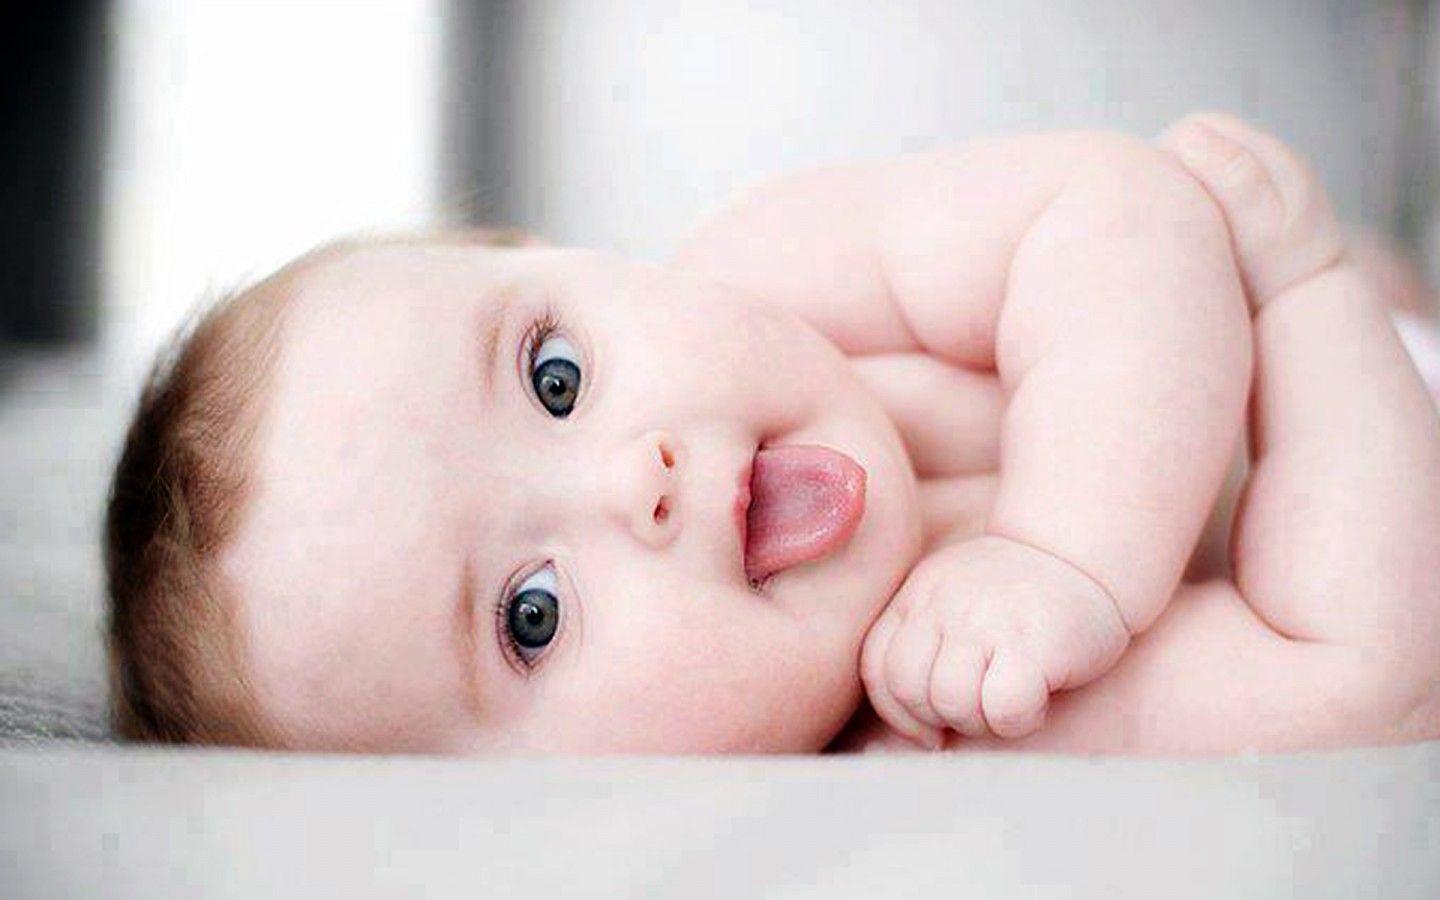 Cute Baby Wallpaper For Desktop Free Download Group. Cute baby